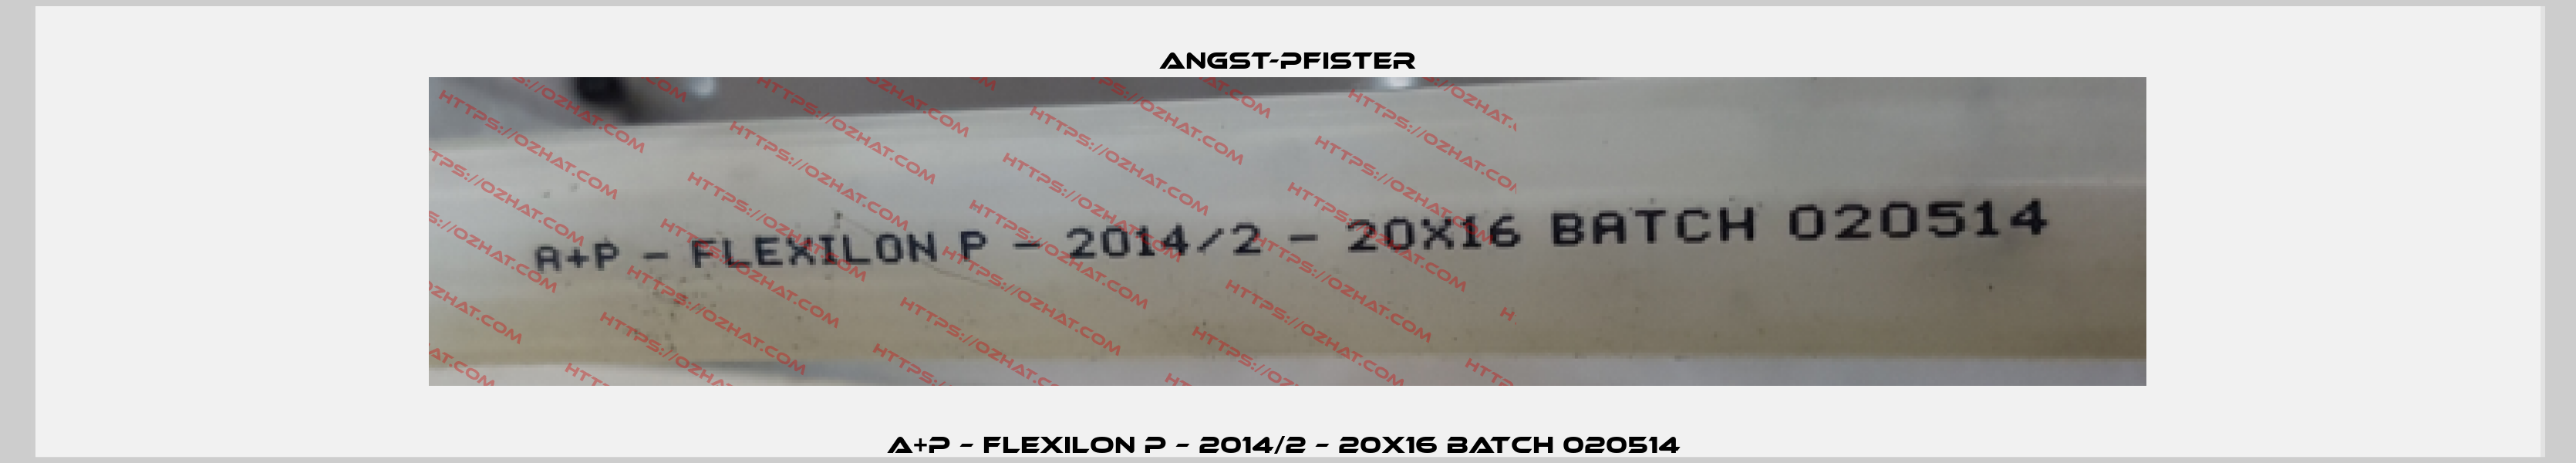 A+P – FLEXILON P – 2014/2 – 20X16 BATCH 020514  Angst-Pfister